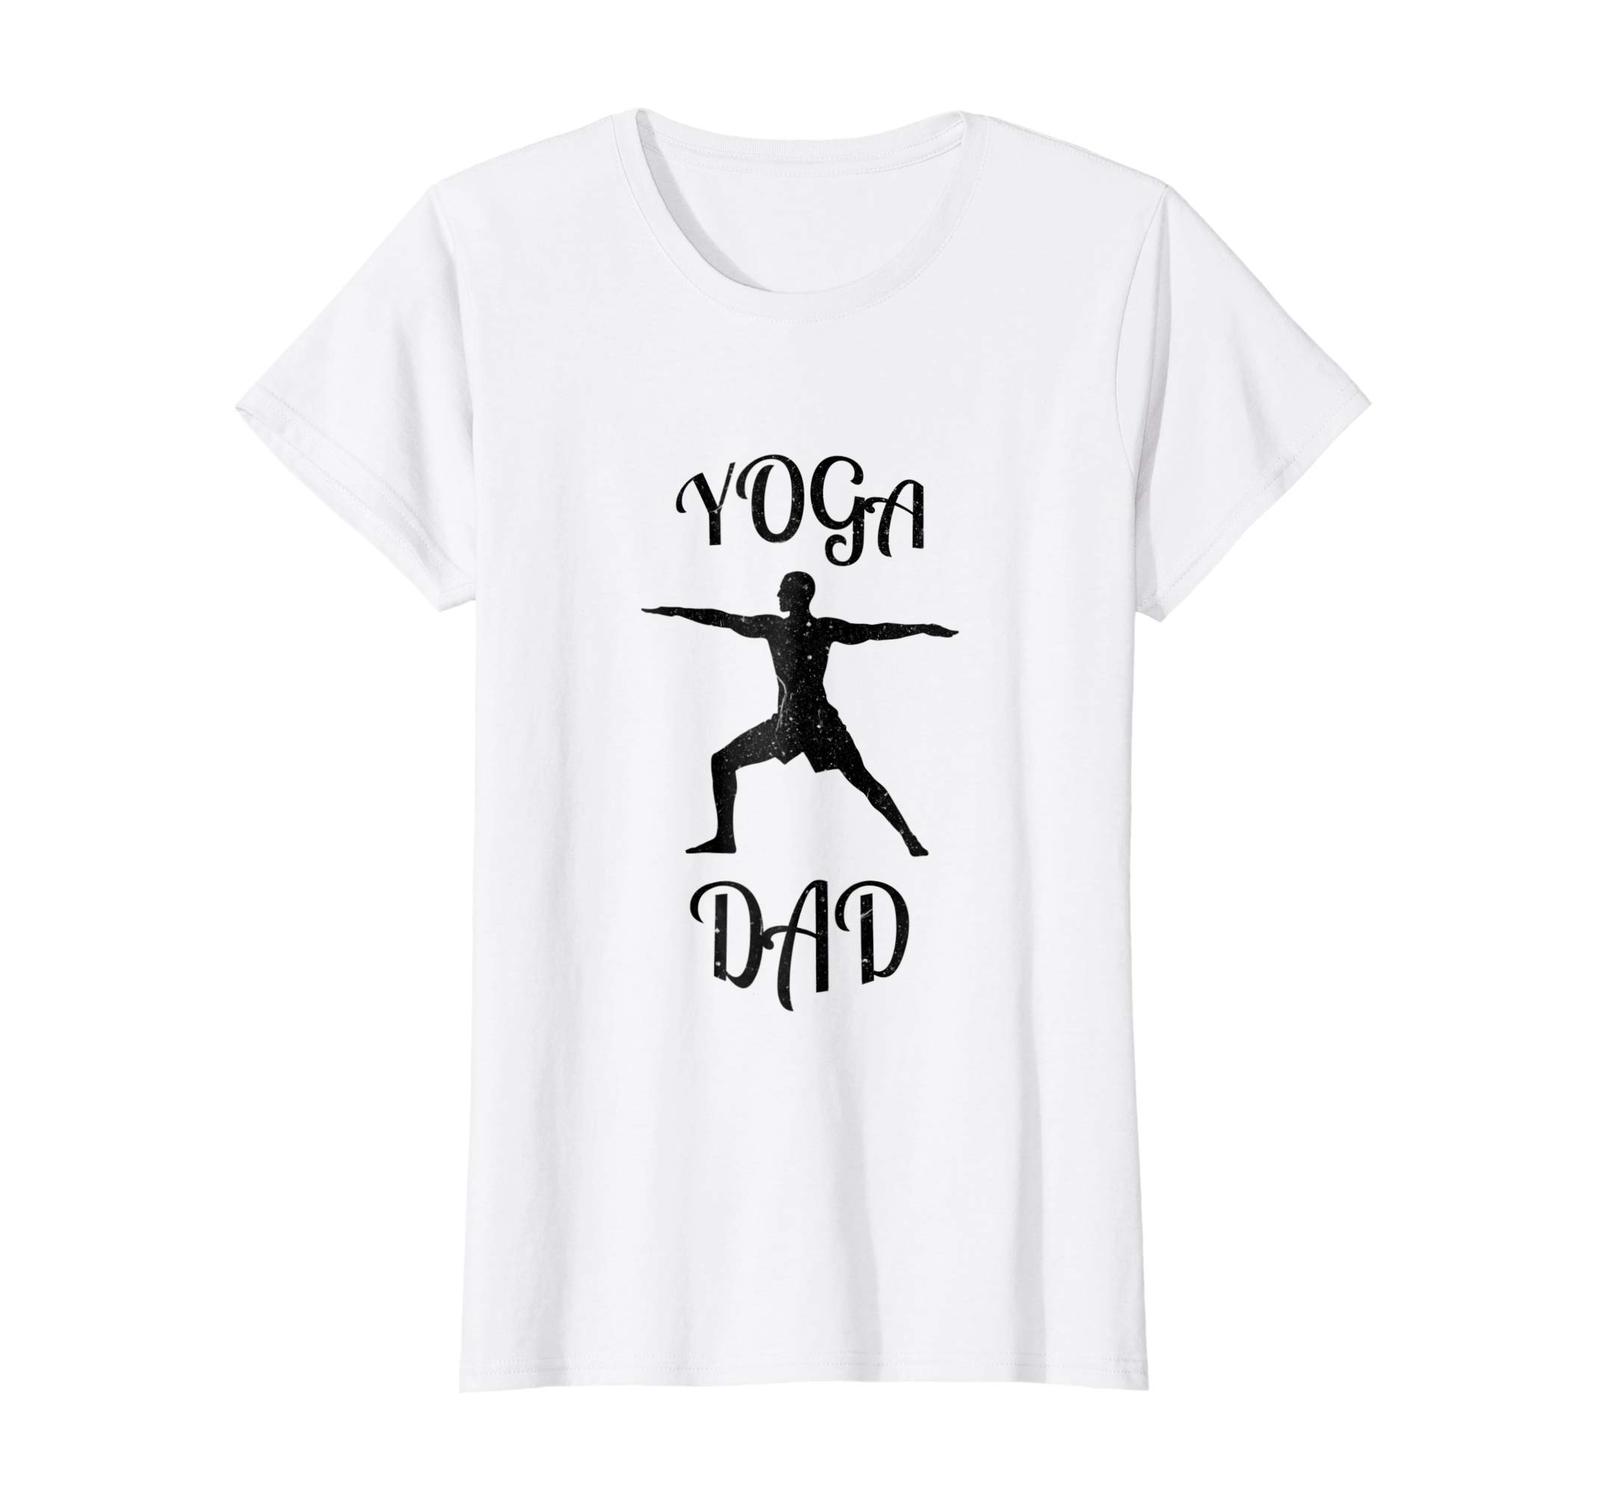 Dog Fashion - Yoga Dad International Yoga Day Cool Namaste t-shirt Wowen